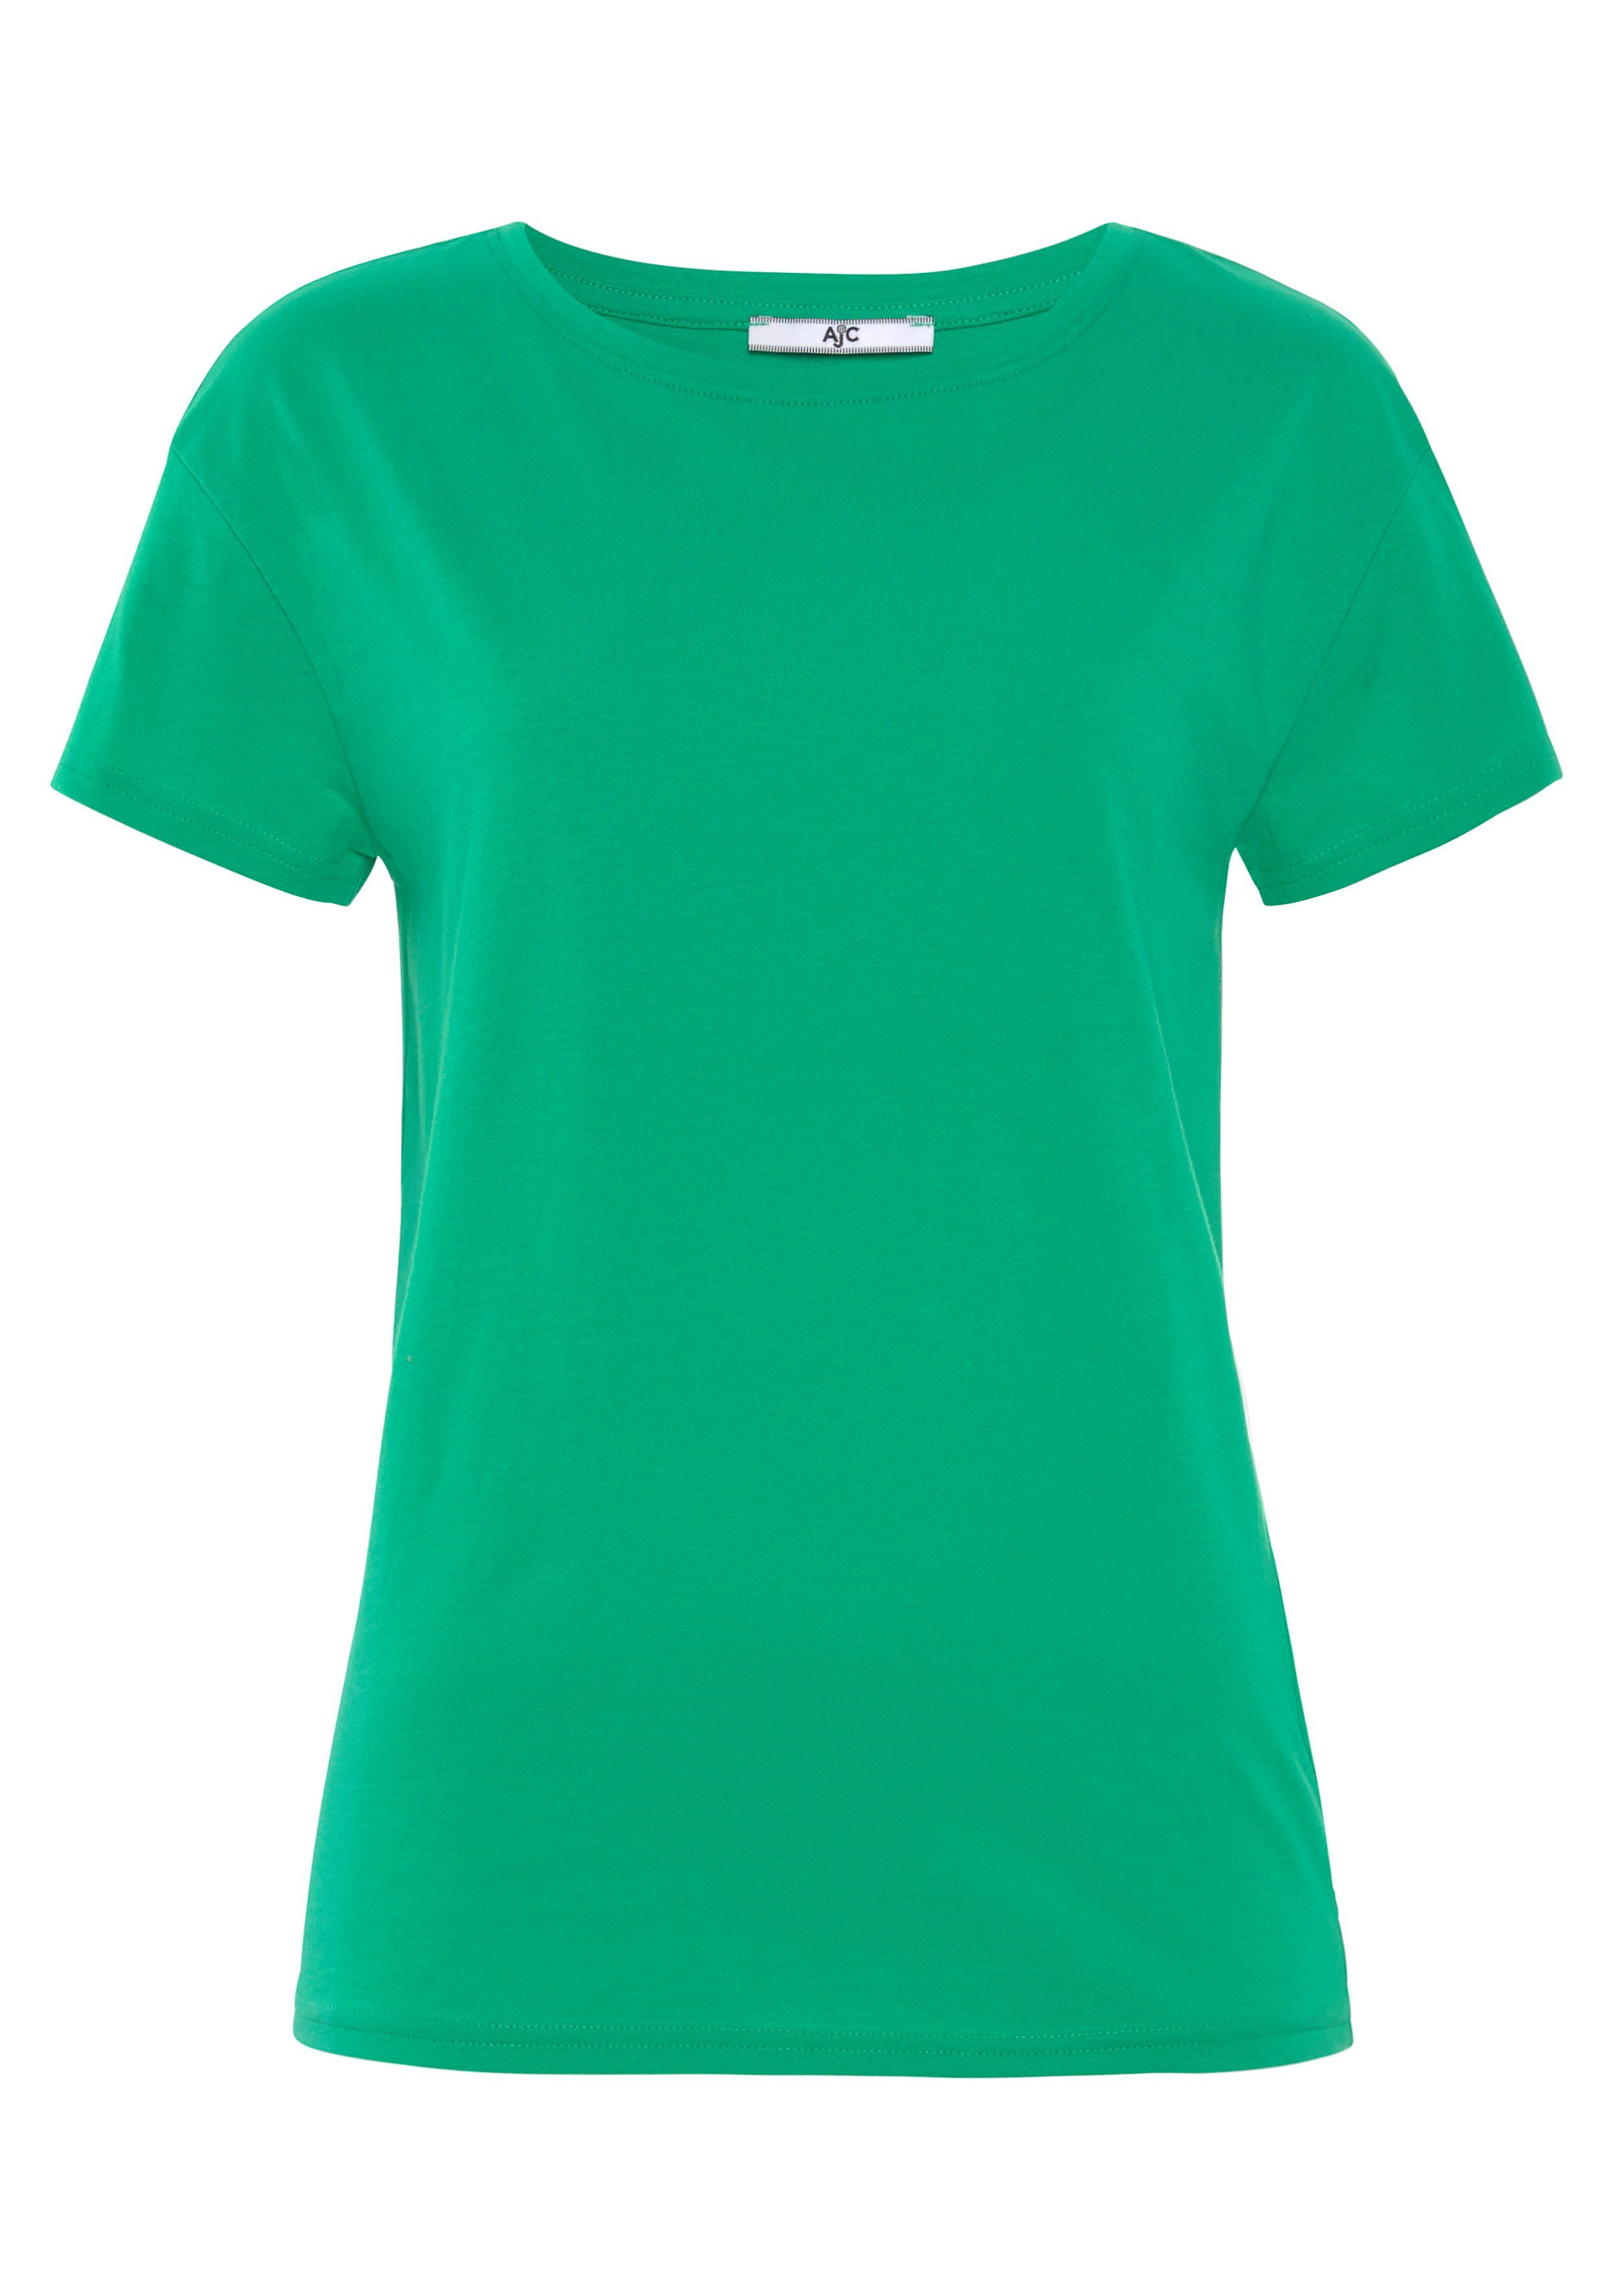 NEUE grün trendigen AJC KOLLEKTION im - Oversized-Look T-Shirt